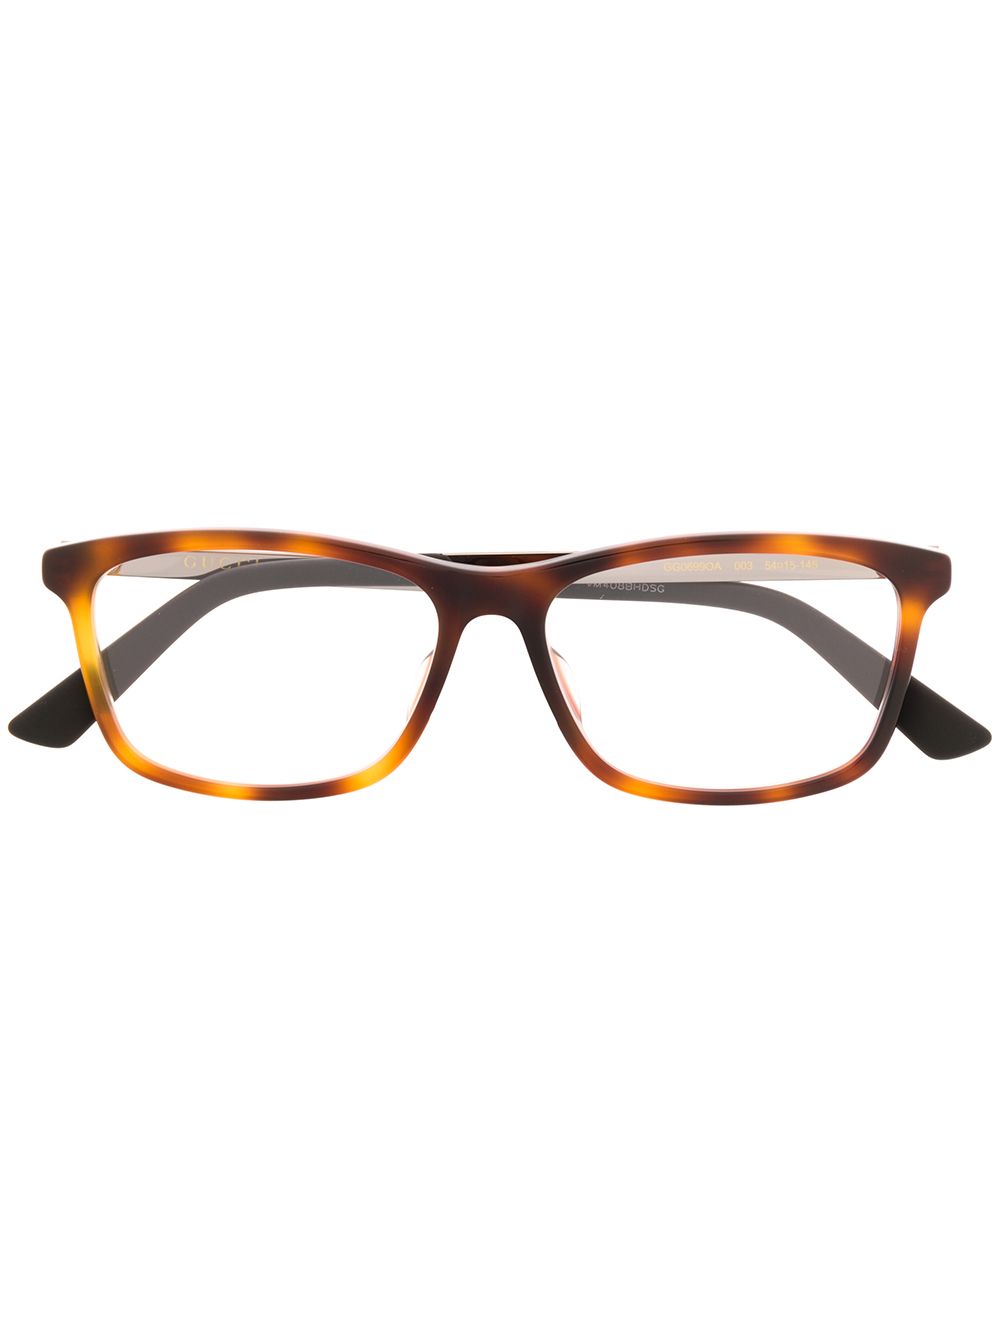 фото Gucci eyewear очки в оправе черепаховой расцветки